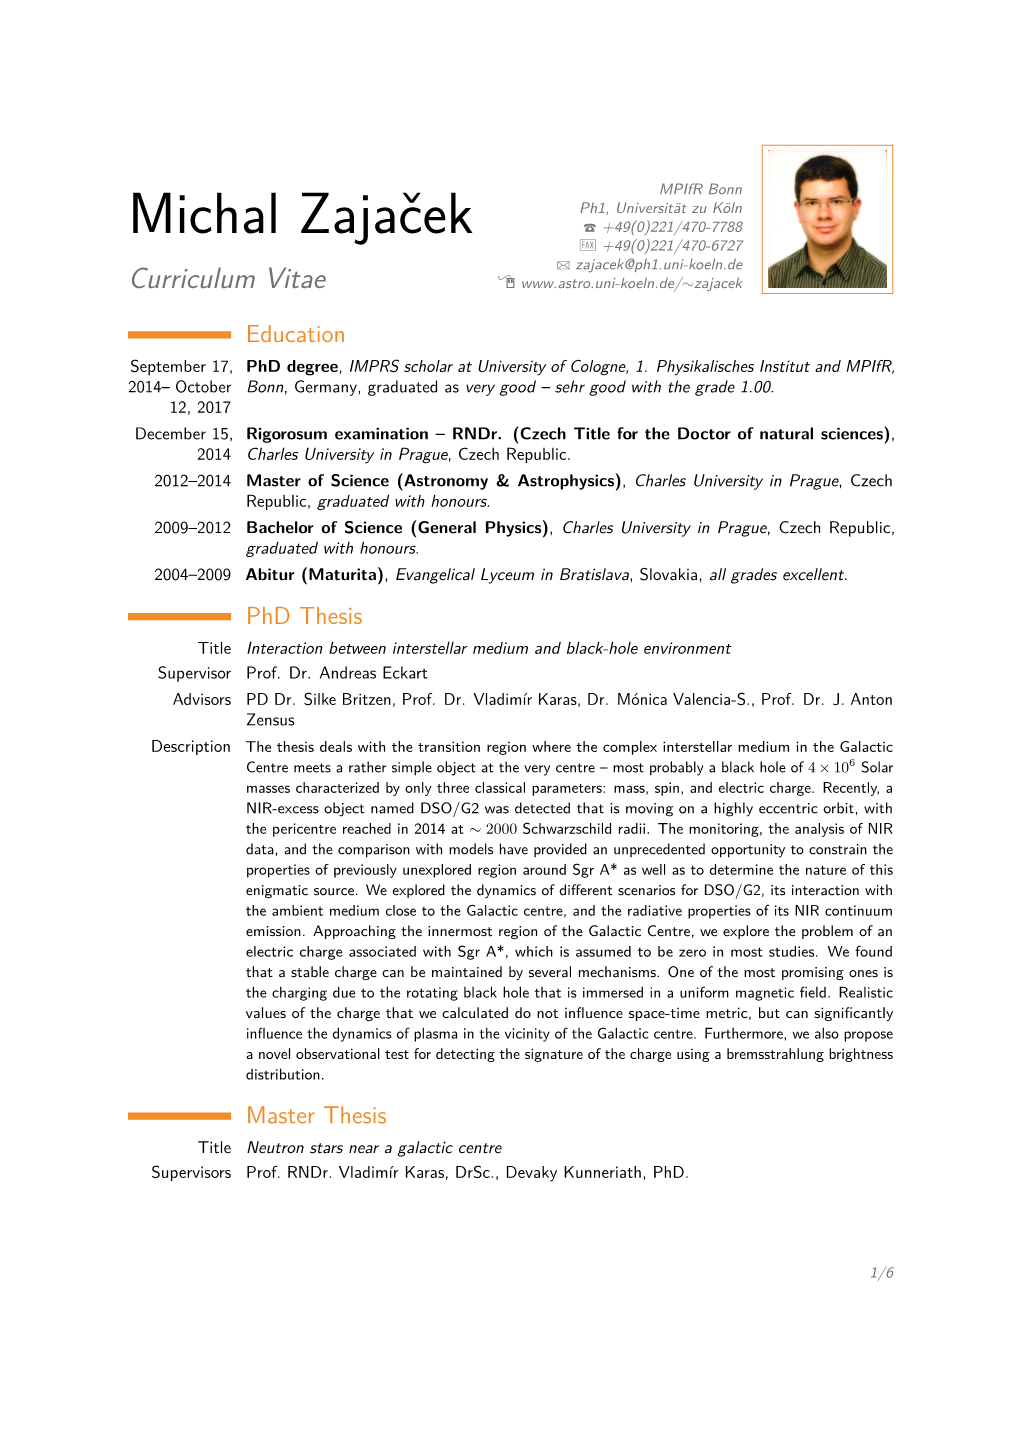 Michal Zajaček – Curriculum Vitae